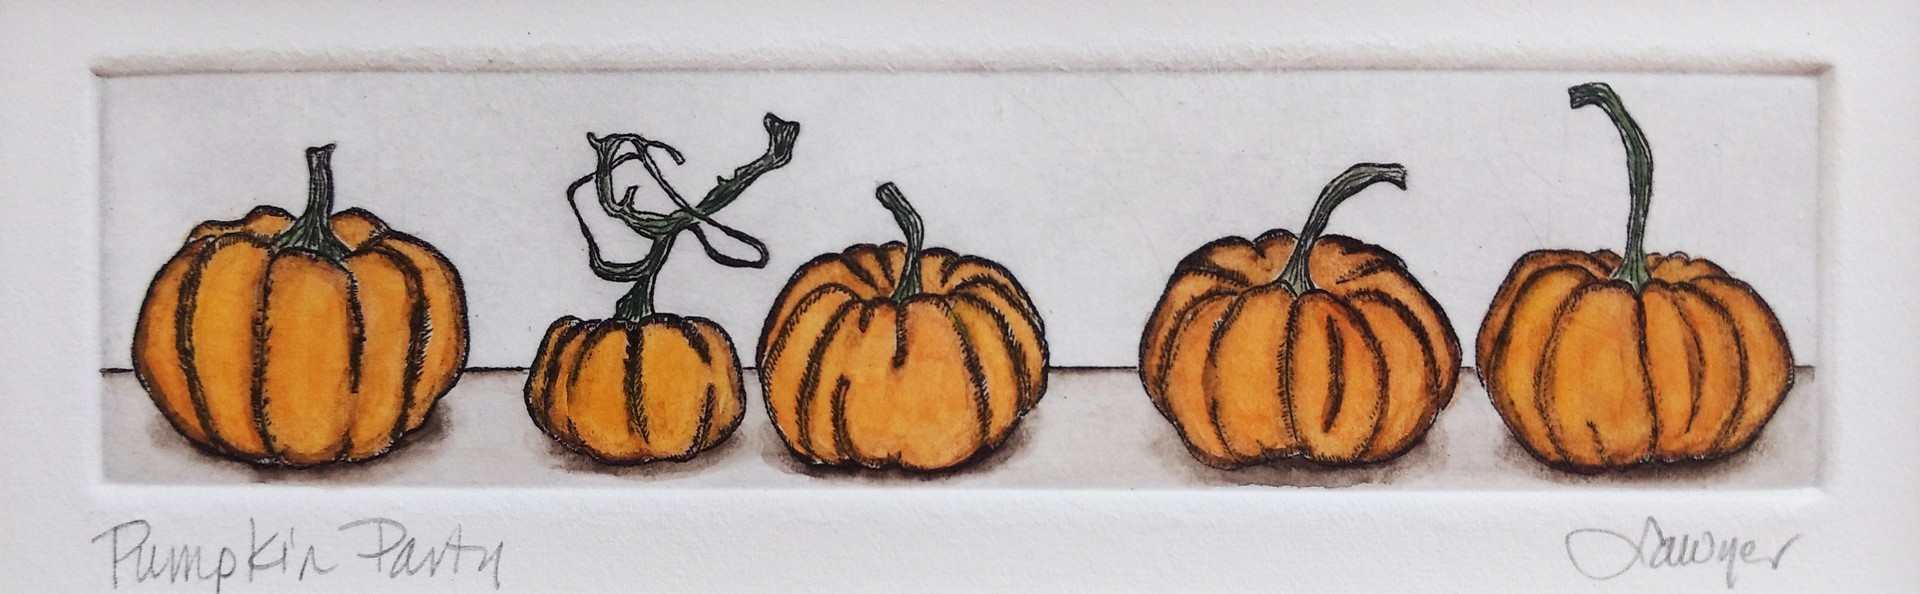 Pumpkin Party (framed) by Anne Sawyer